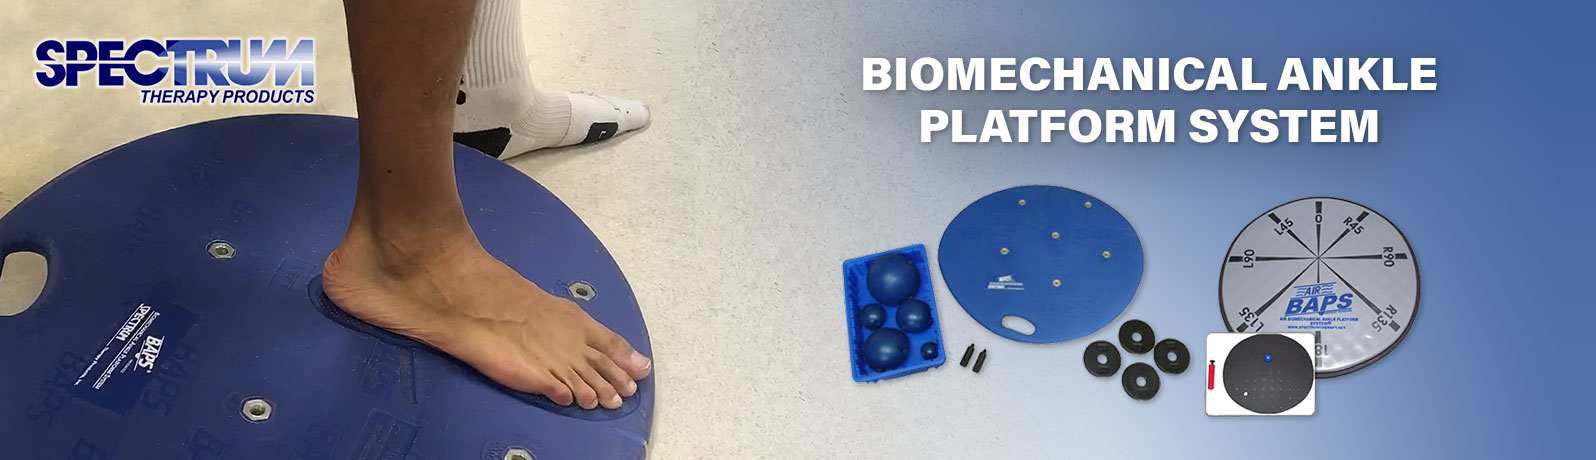 Biomechanical Ankle Platform System